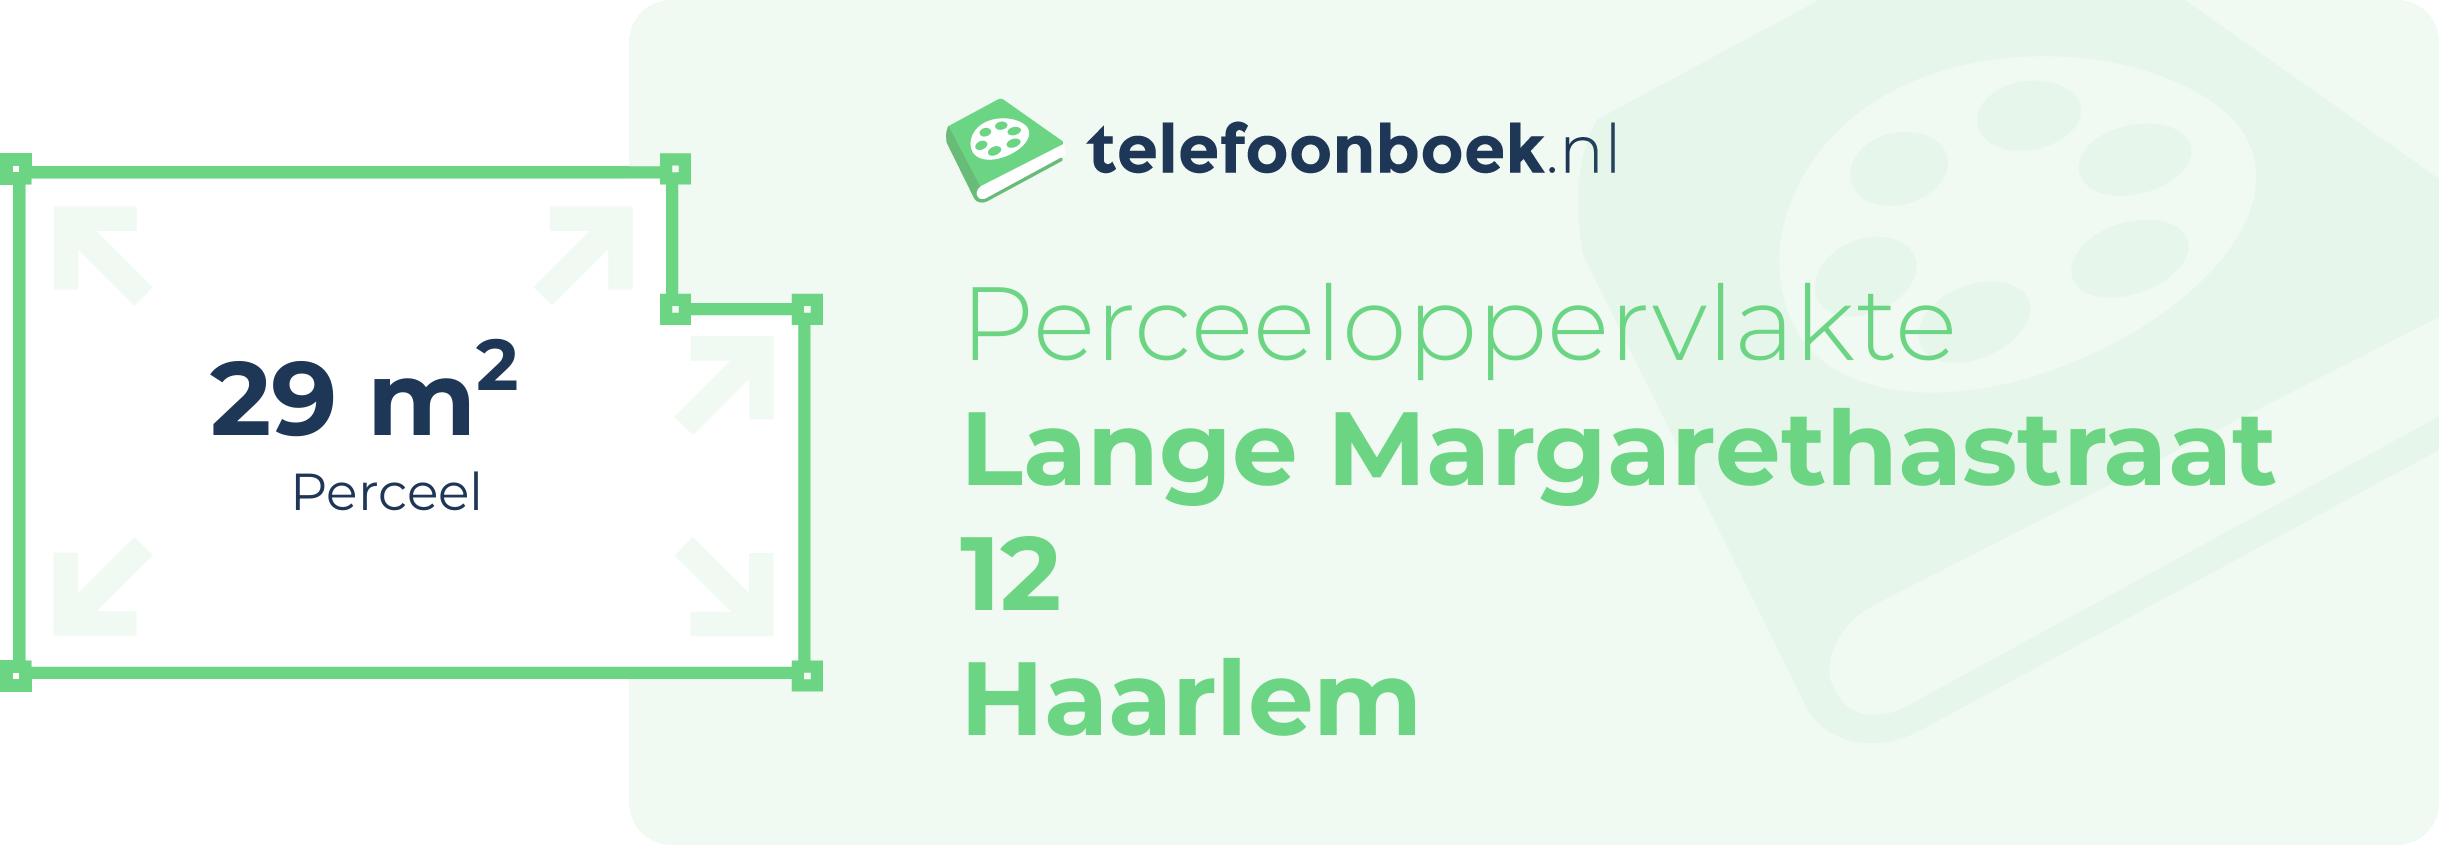 Perceeloppervlakte Lange Margarethastraat 12 Haarlem